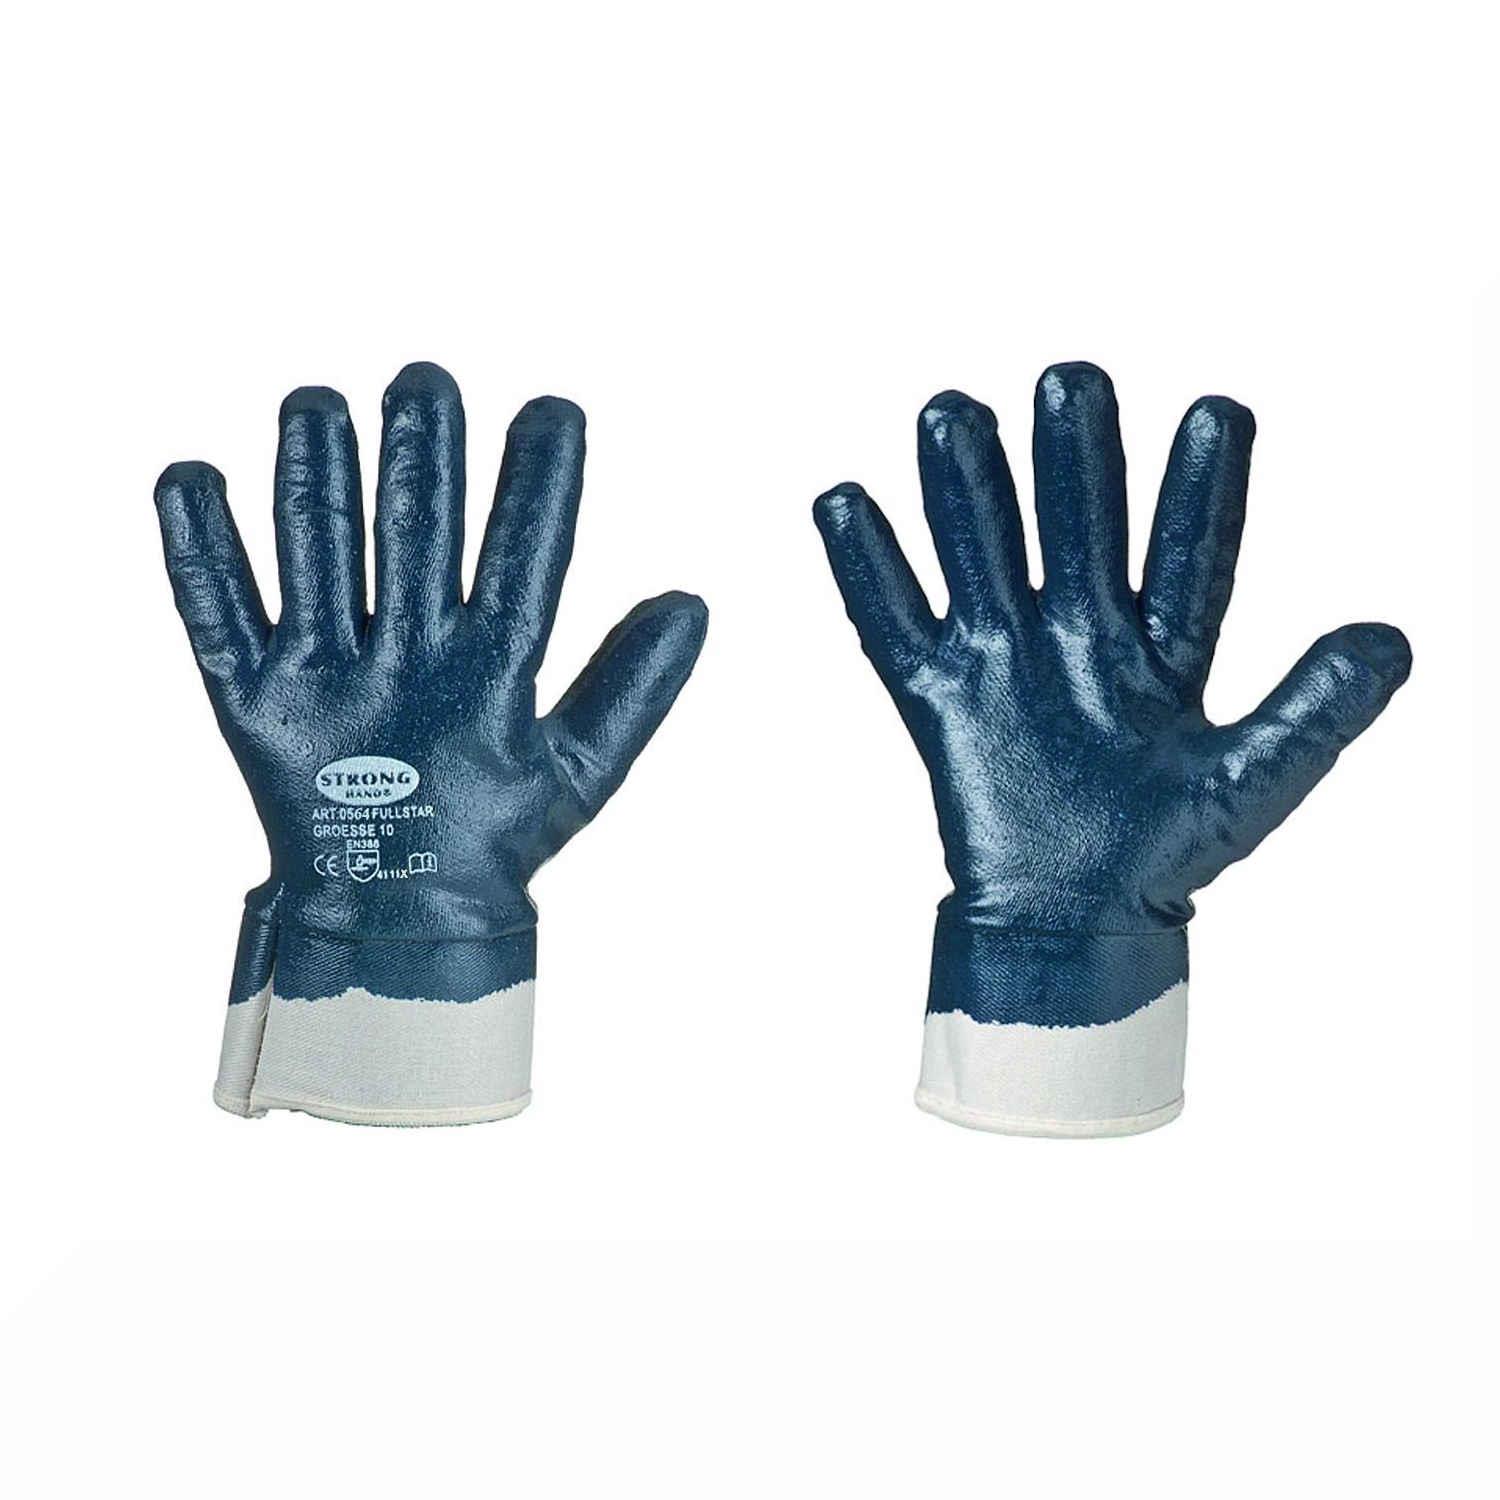 Fullstar Stronghand Nitril Handschuh blau Gr. 9